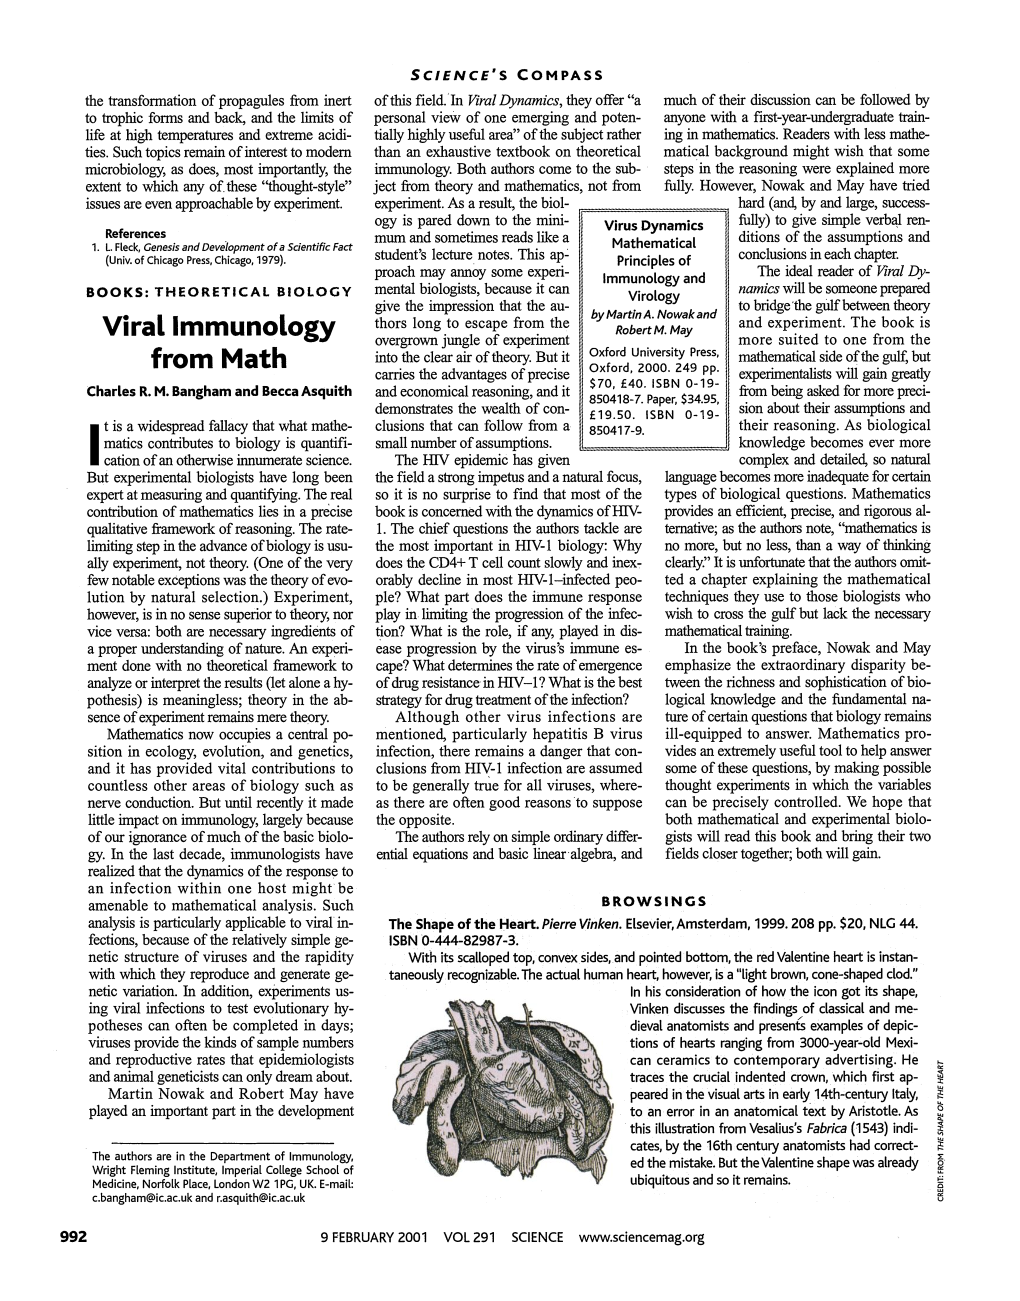 Virus Dynamics: Mathematical Principles of Immunology and Virolog